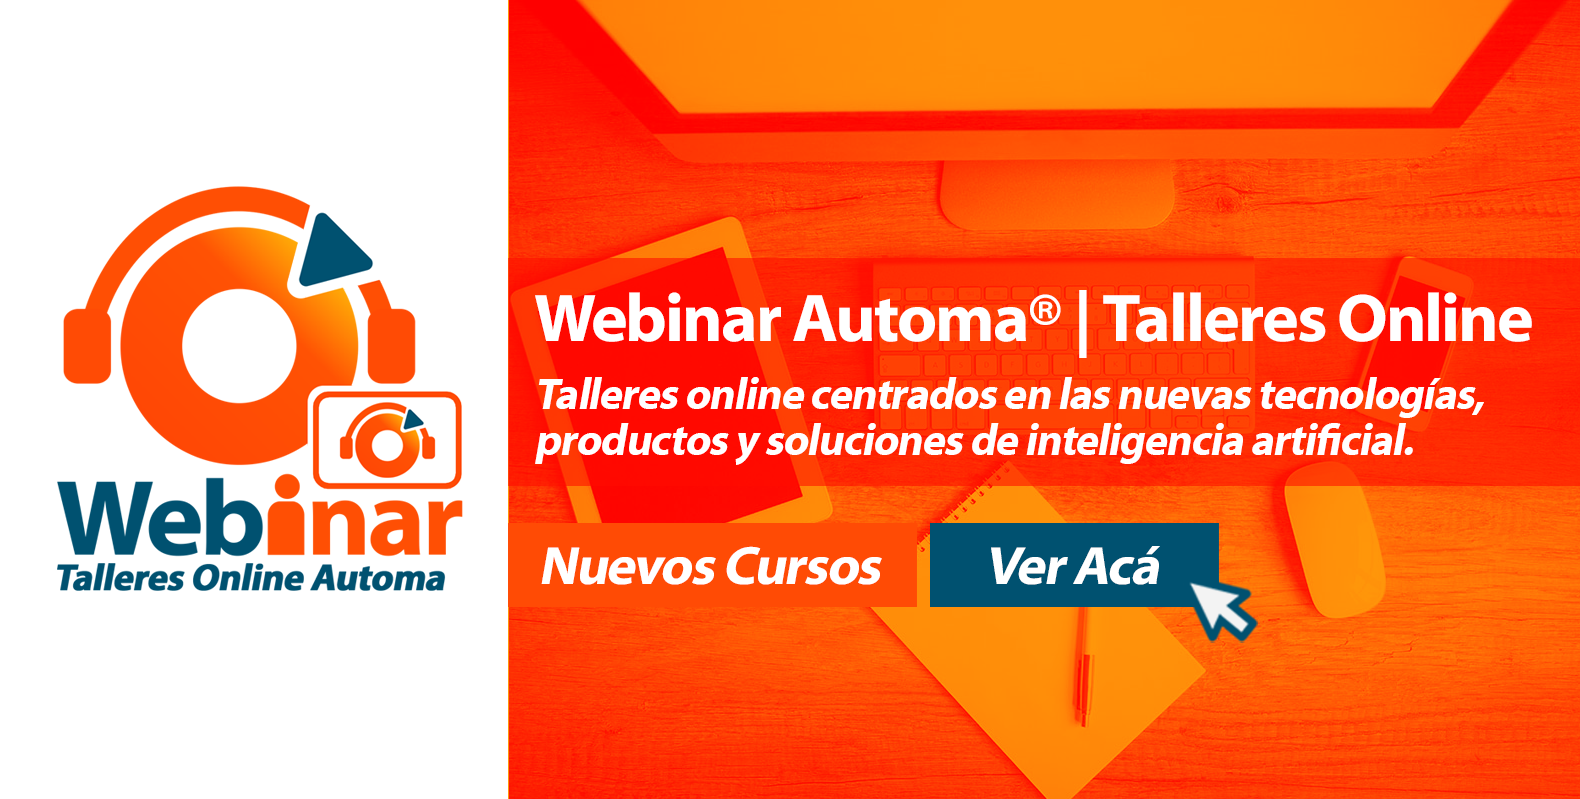 Webinar Automa® | Talleres Online 